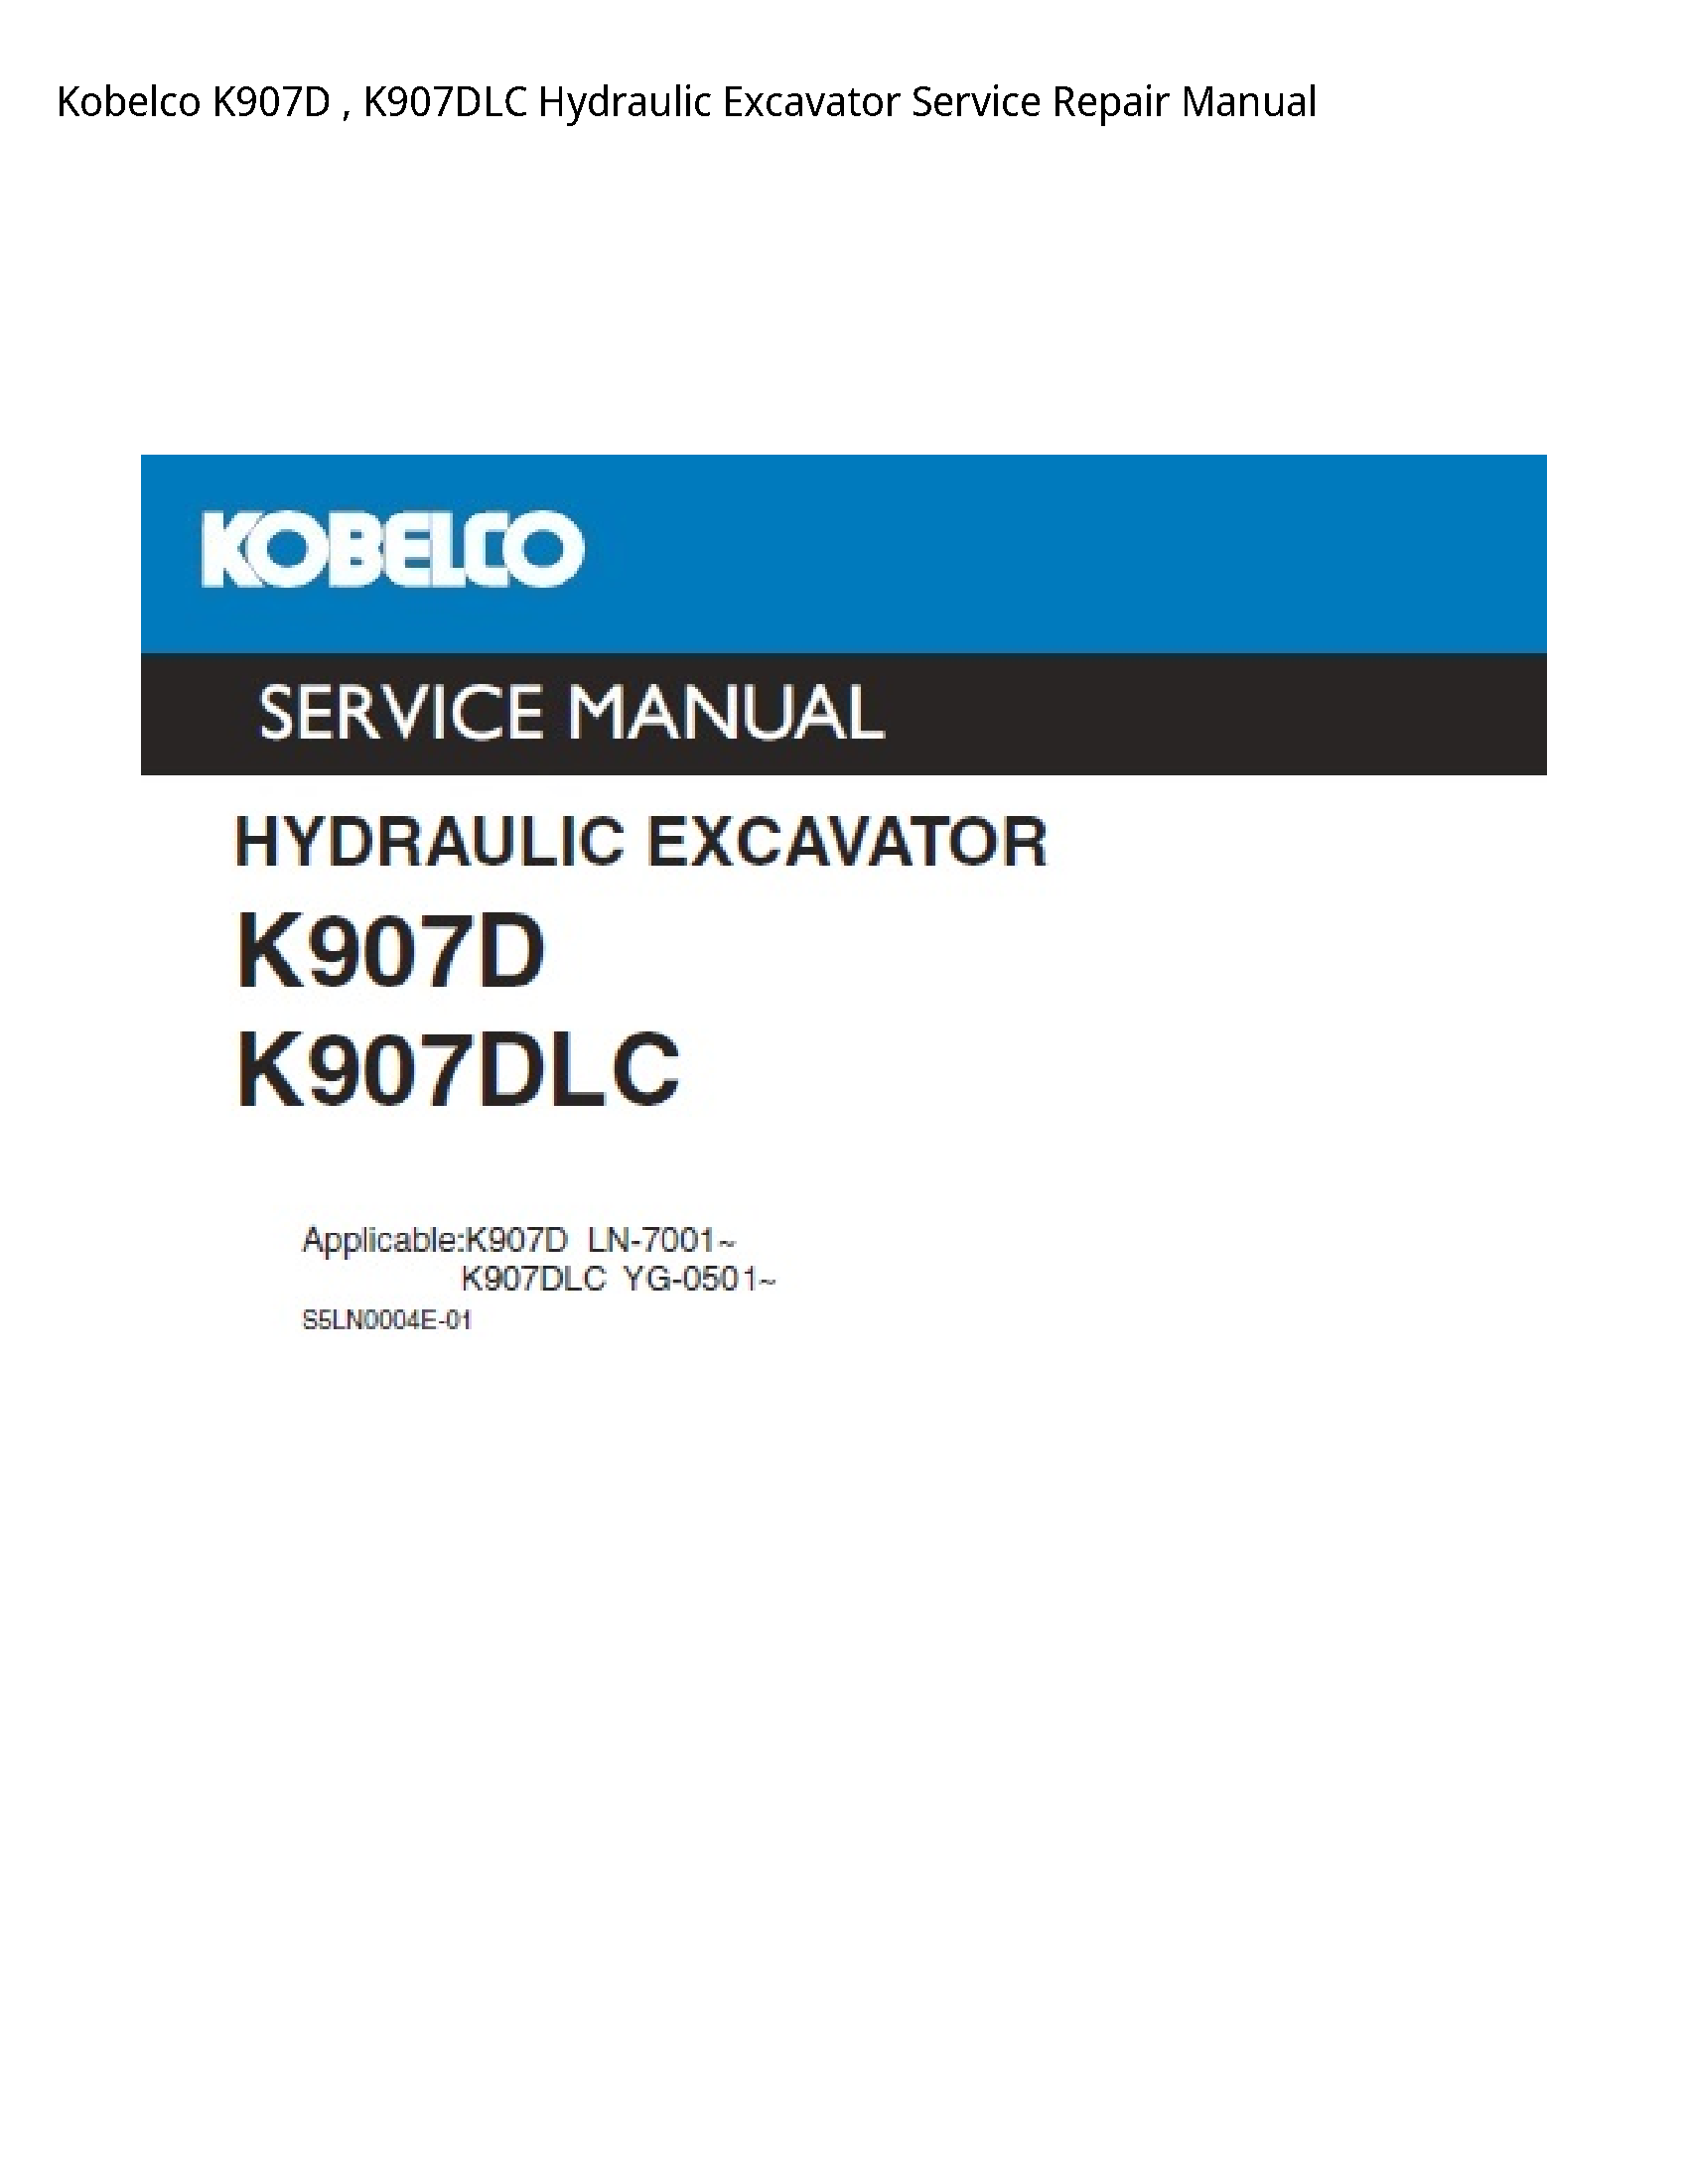 Kobelco K907D Hydraulic Excavator manual